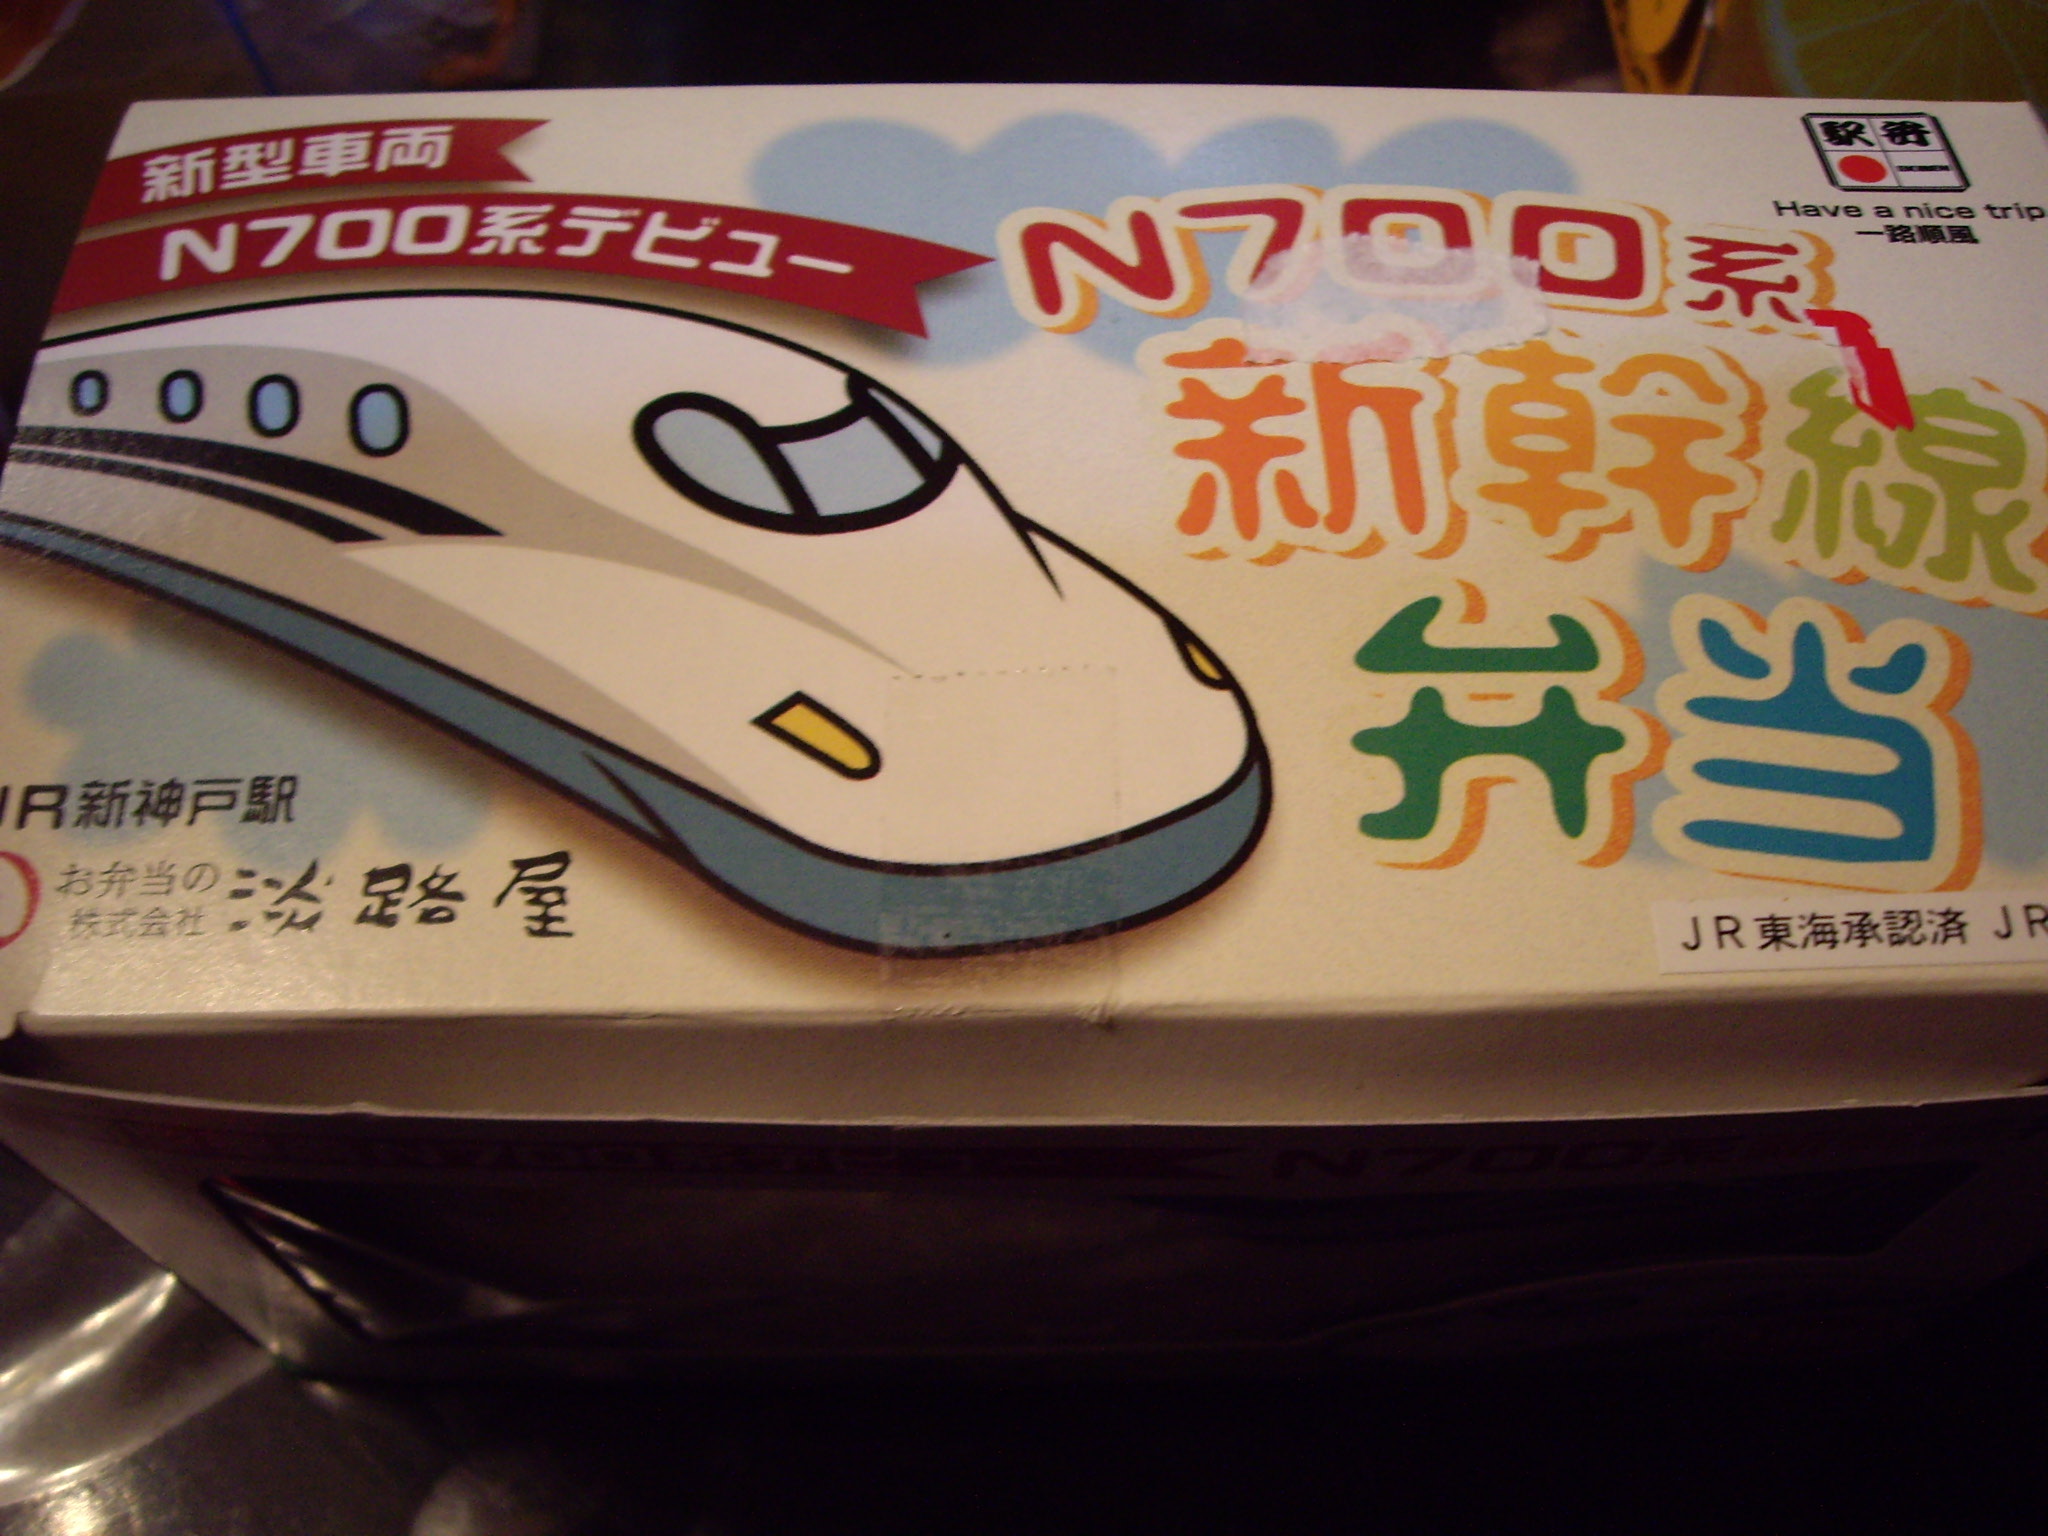 N700系新幹線弁当を買いました Jr新神戸駅の駅弁 食べ物 スイーツについてのお話です